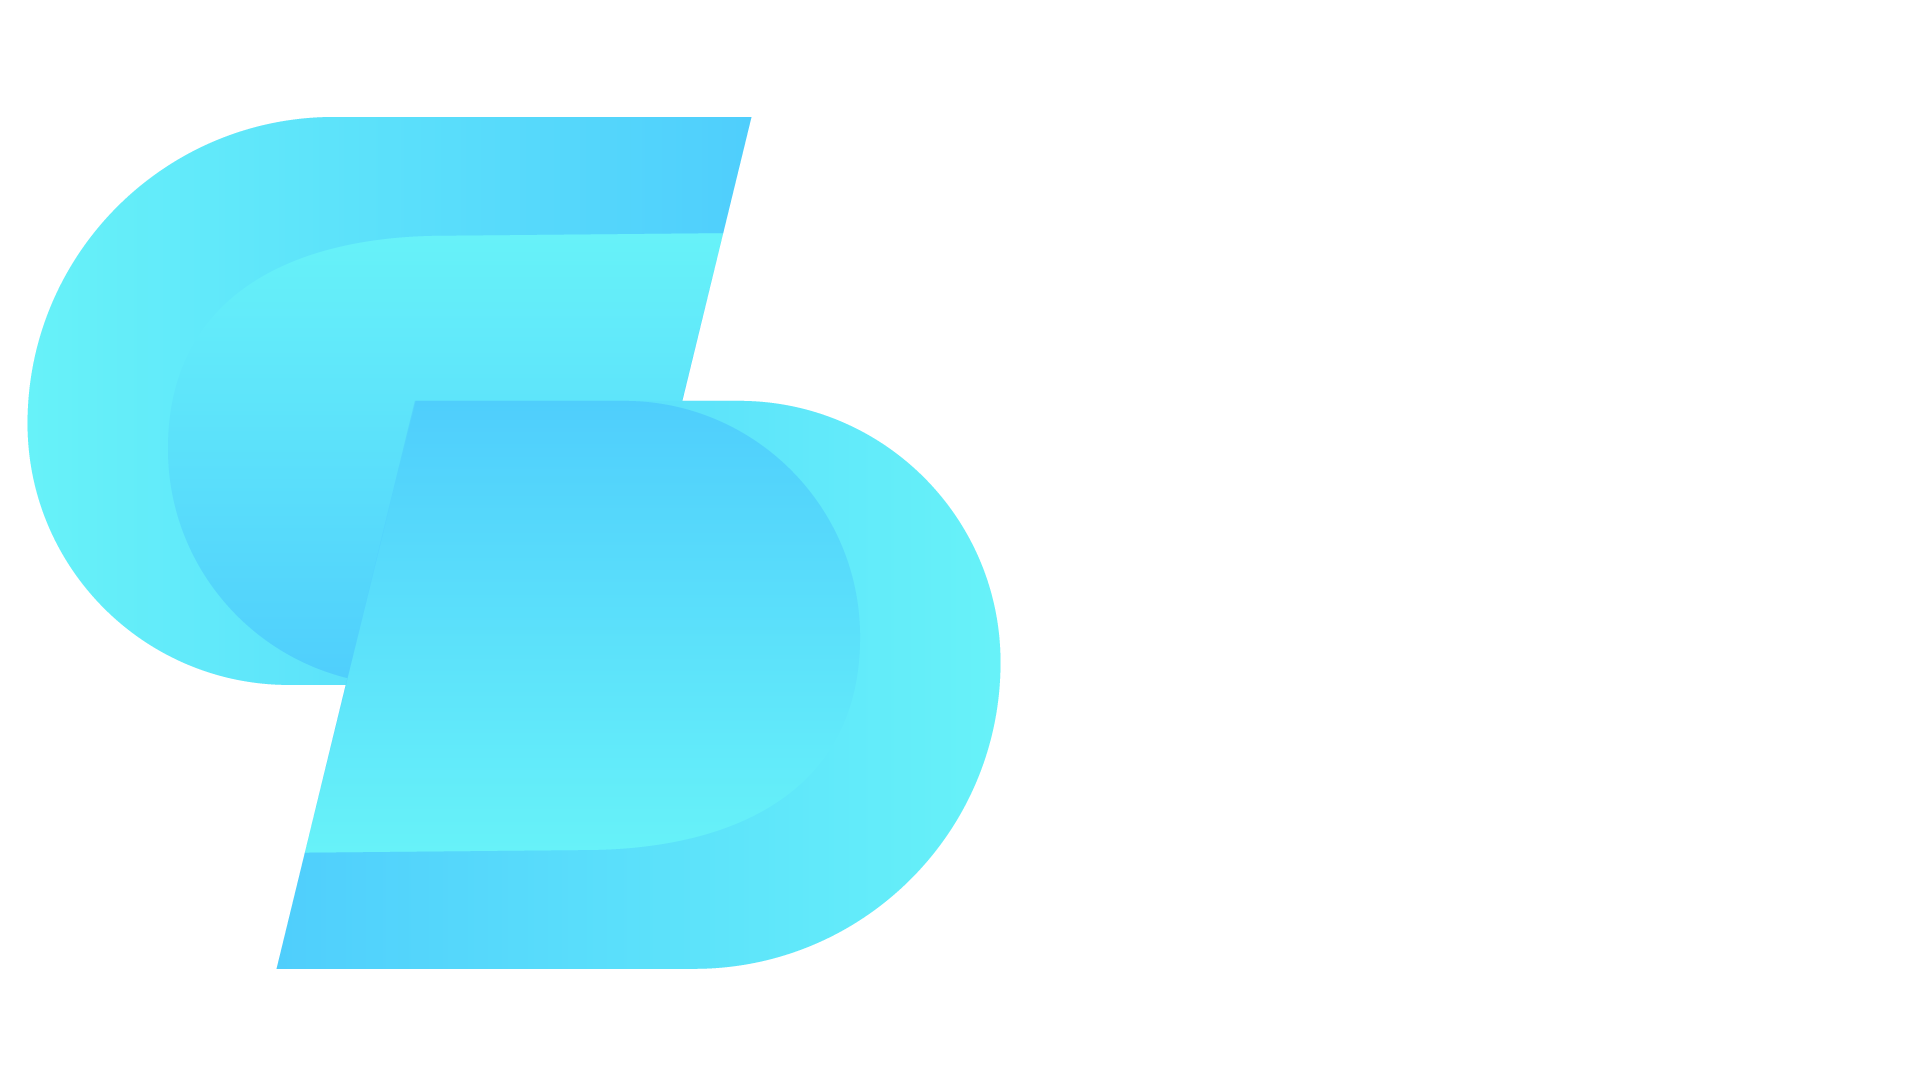 SmartCities